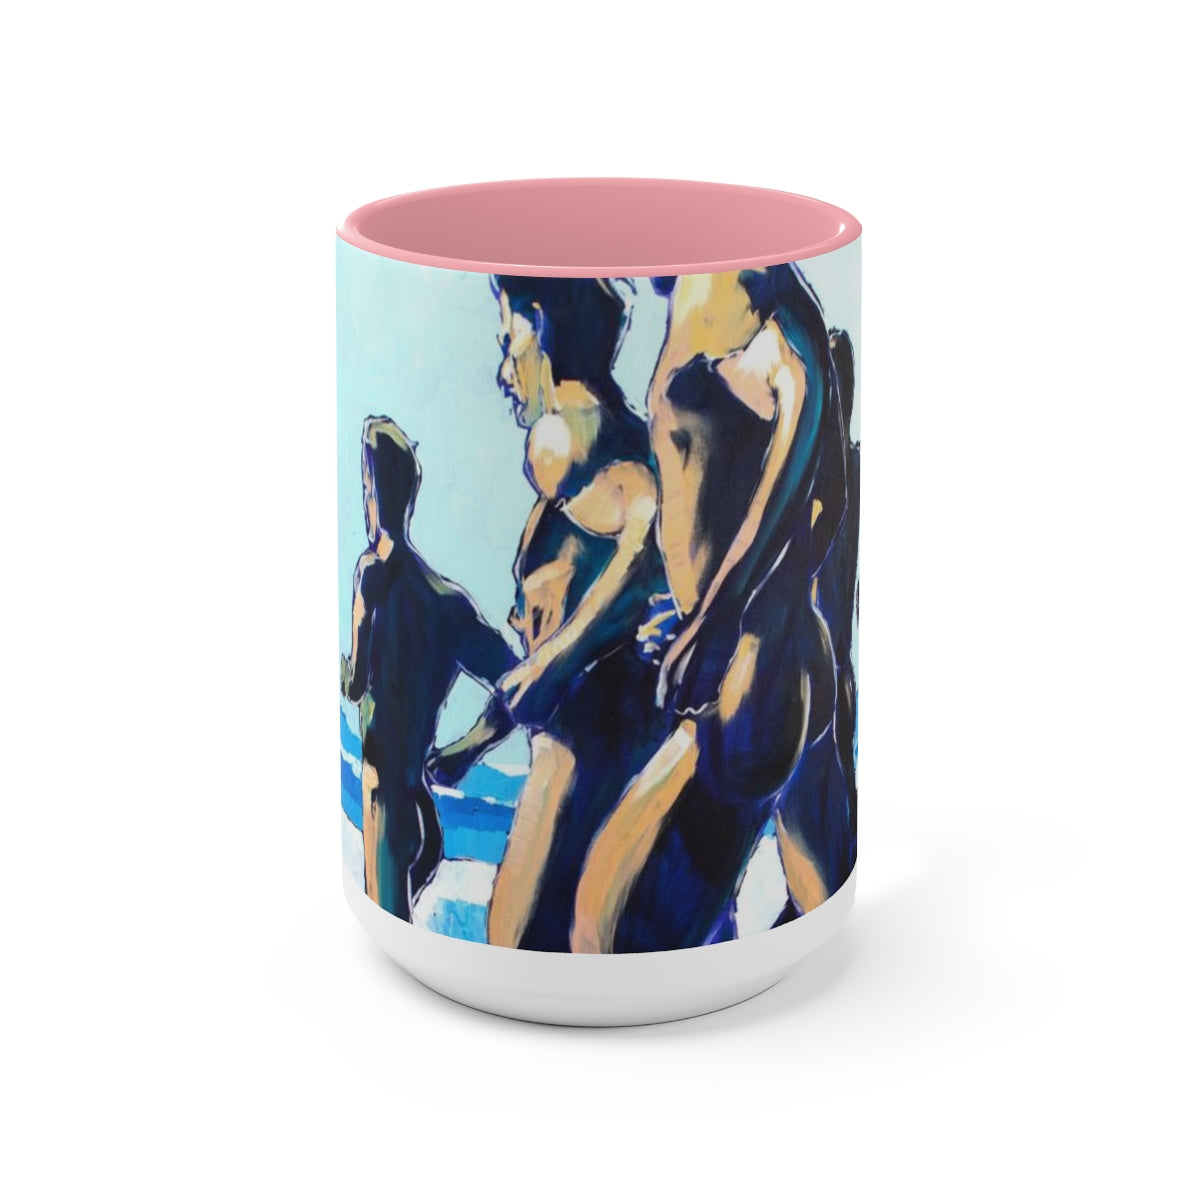 Nude Male Runners on the Beach - Two-Tone Coffee Mugs, 15oz